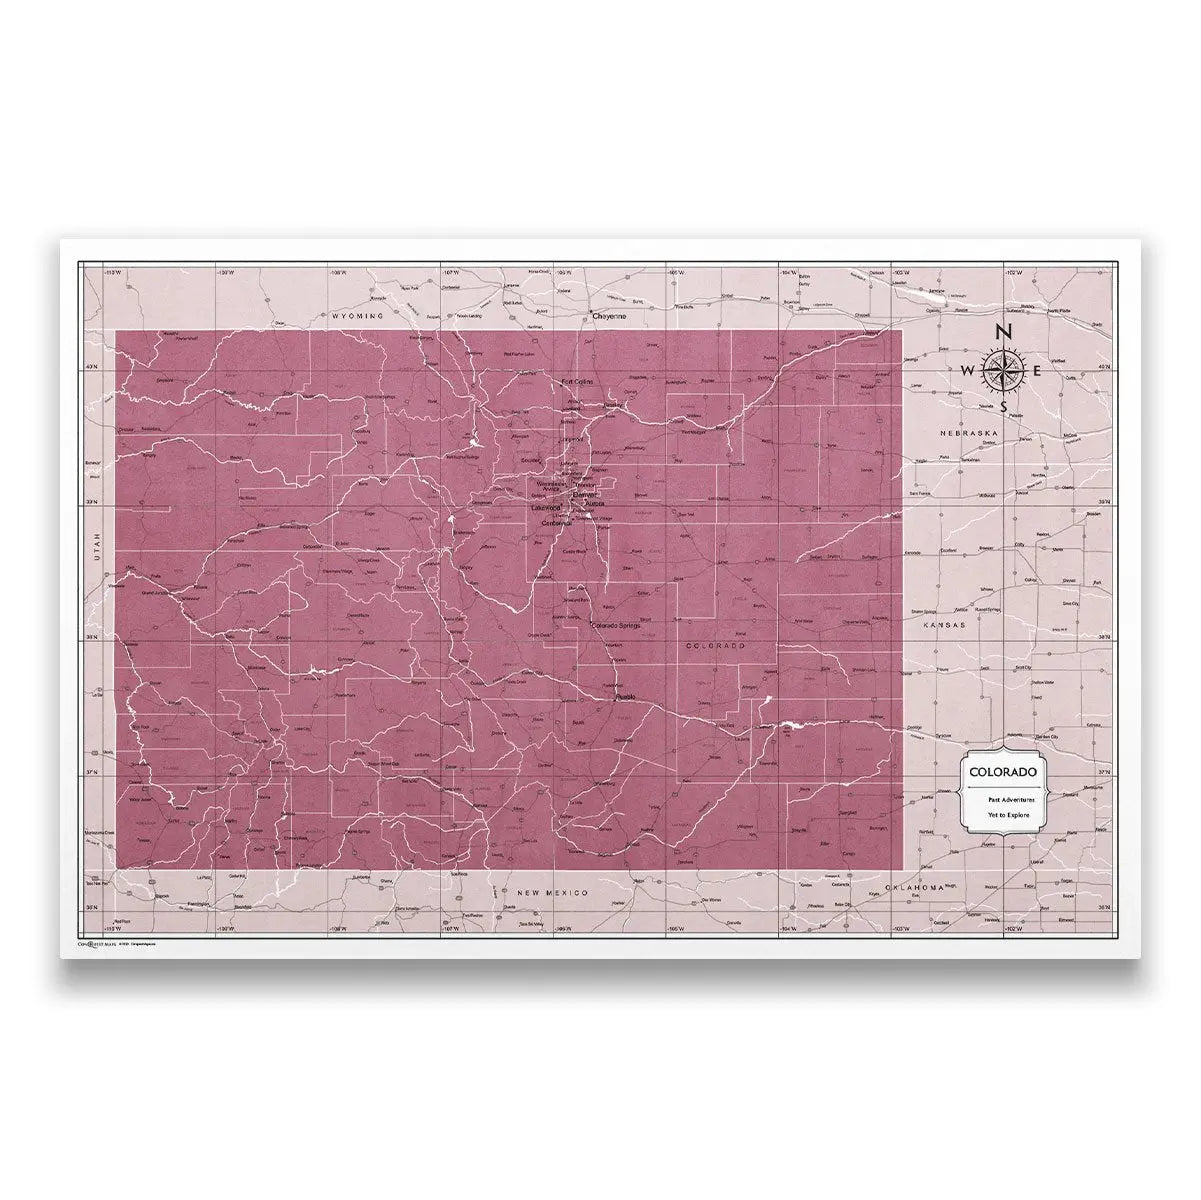 Colorado Poster Maps